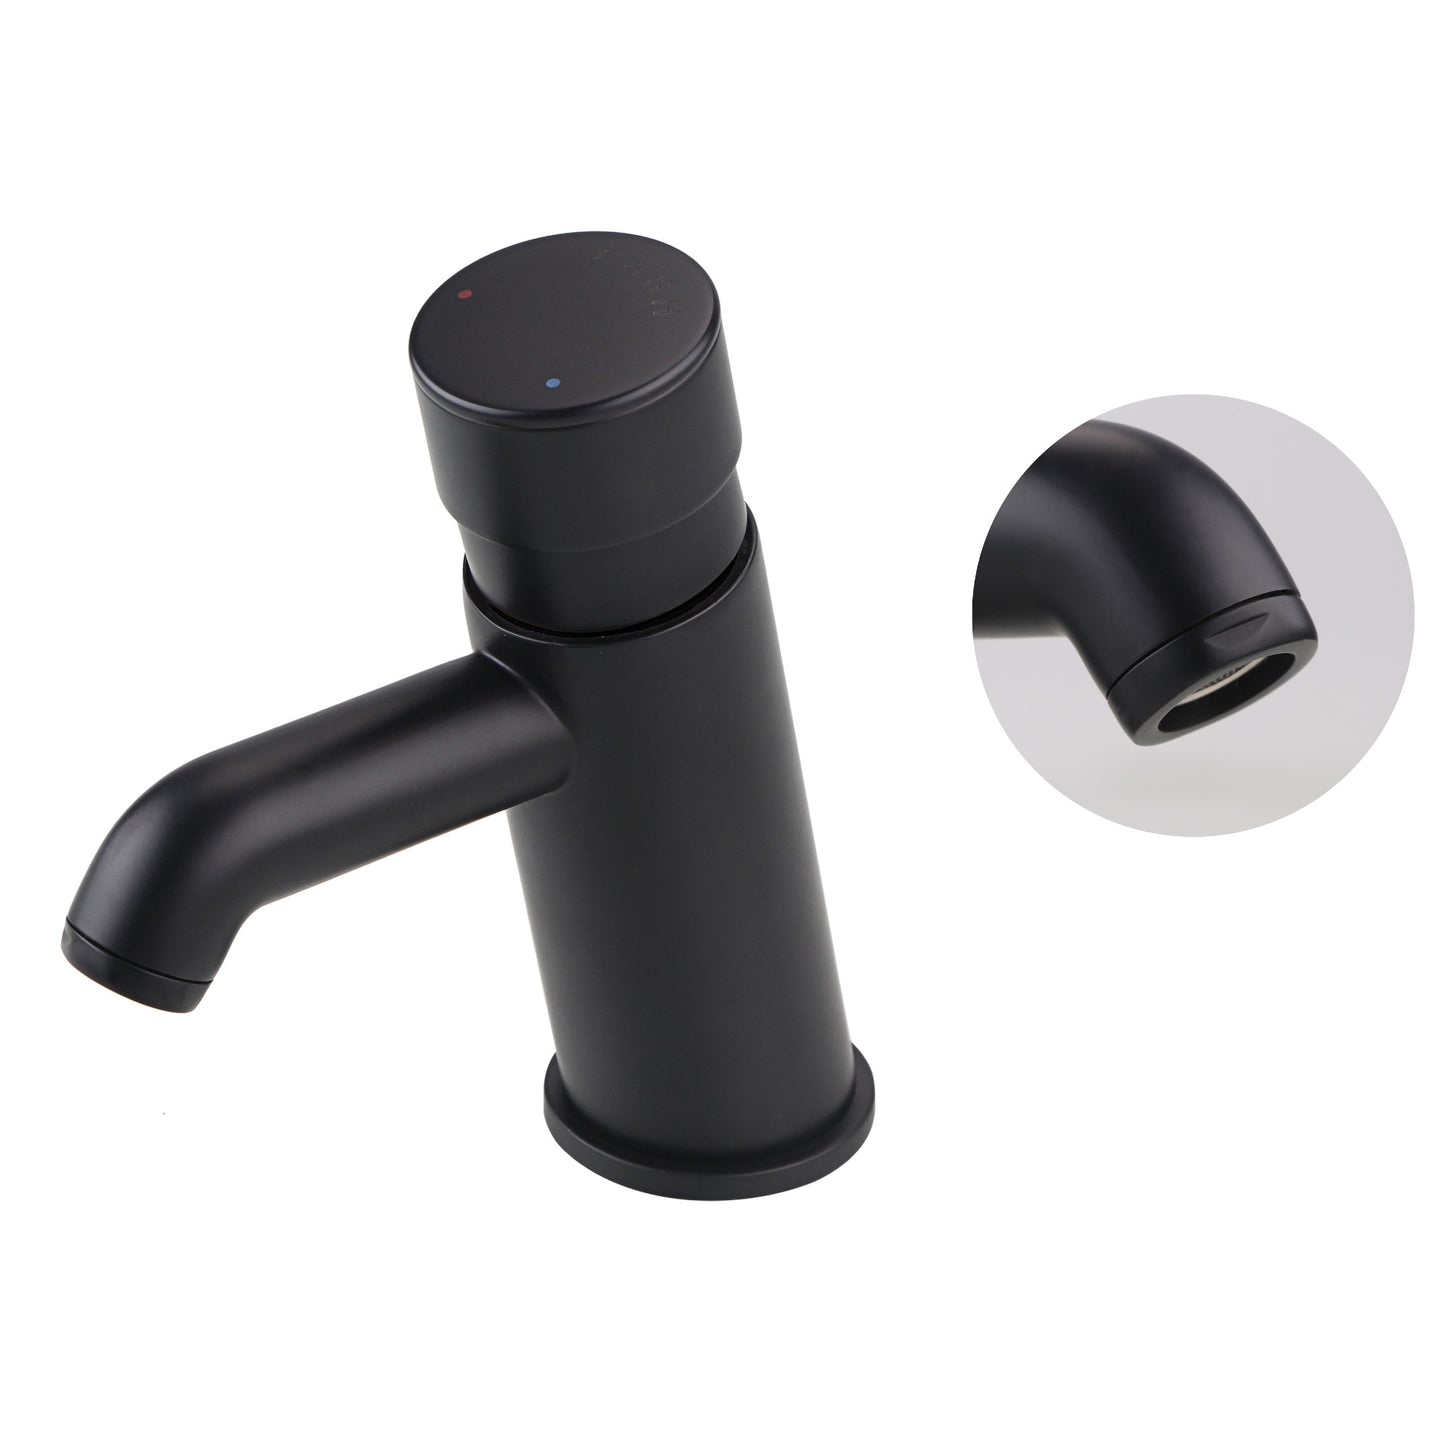 Vision mono non concussive time adjustable basin mixer tap modern - black - 12 pack